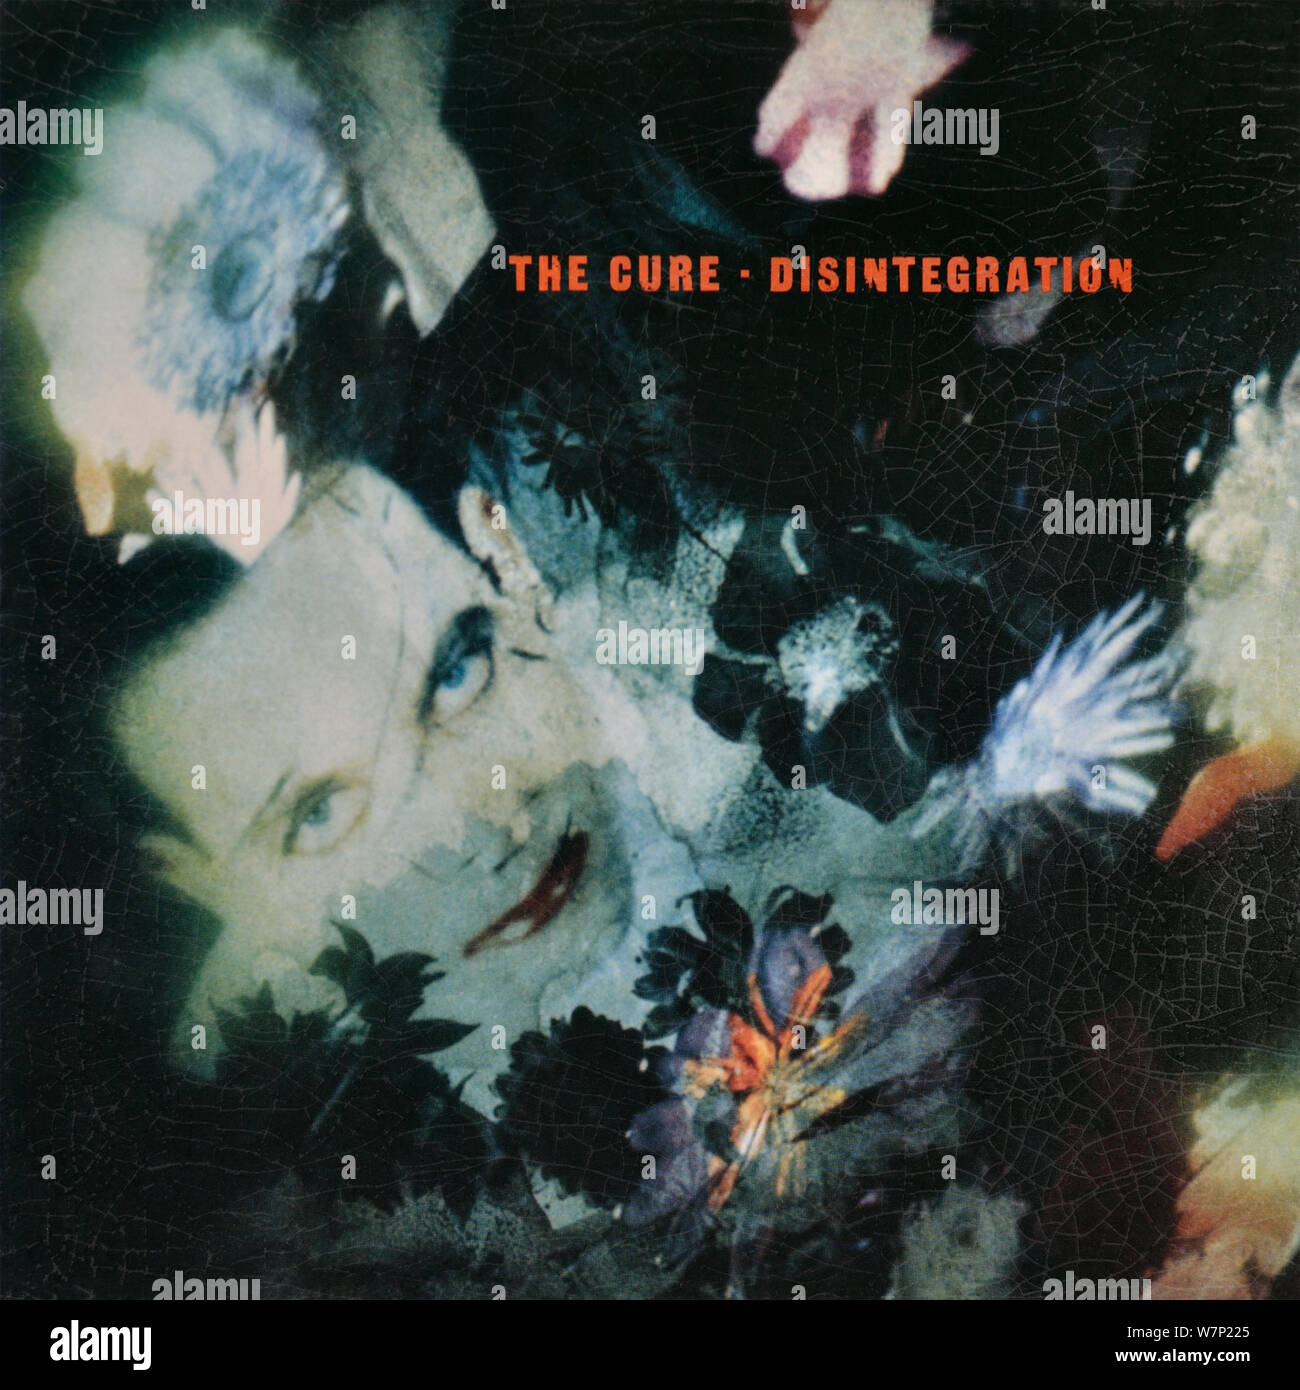 The Cure - original vinyl album cover - Disintegration - 1989 Stock Photo